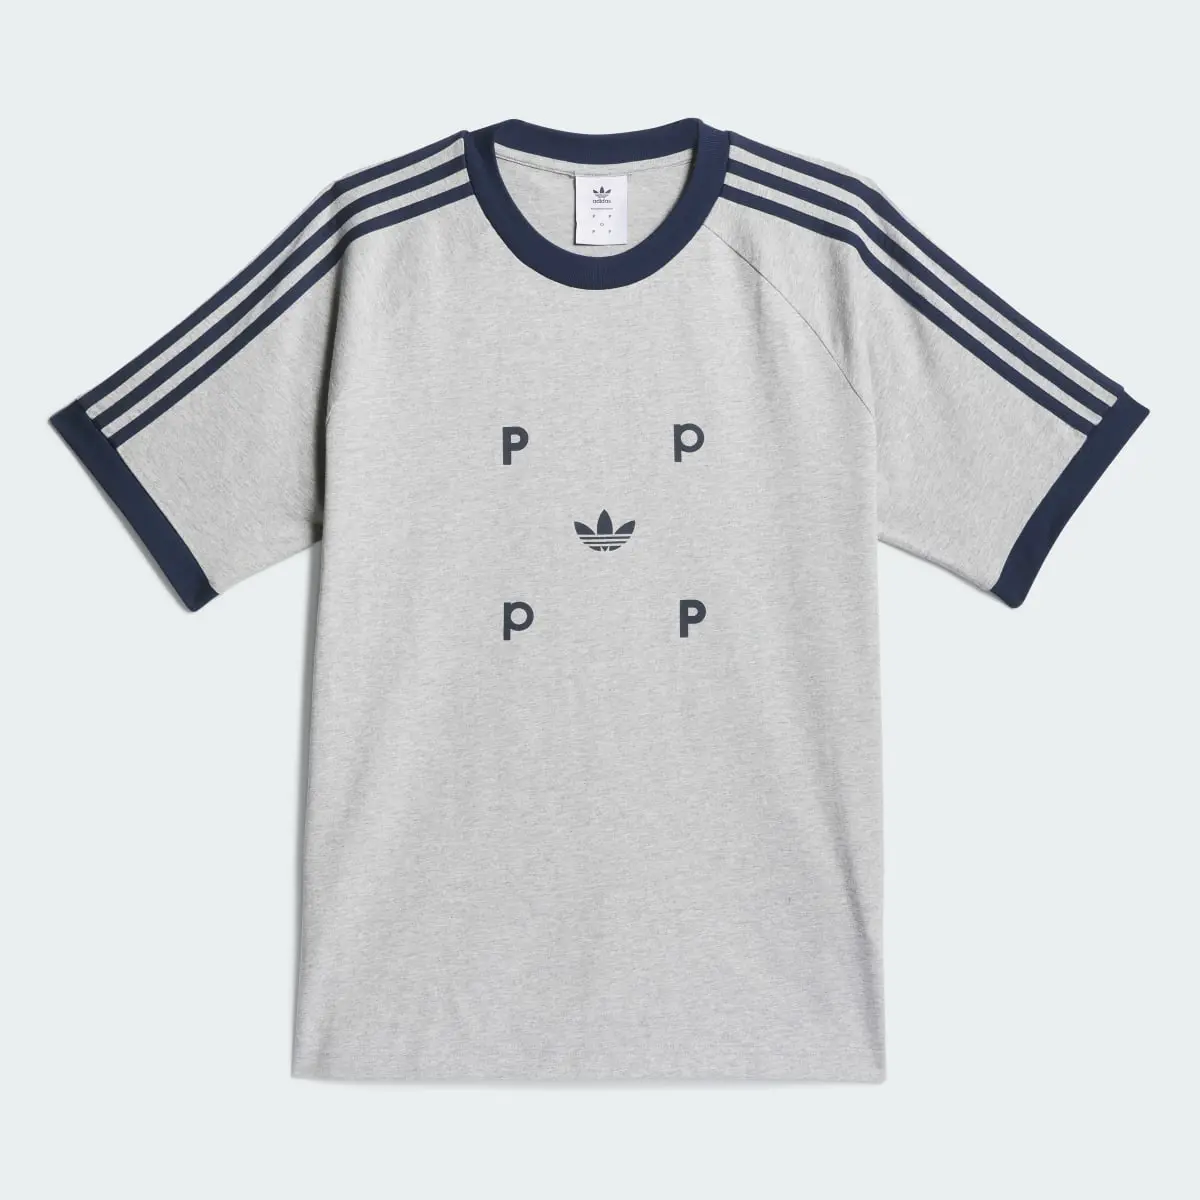 Adidas T-shirt Pop Classic. 2